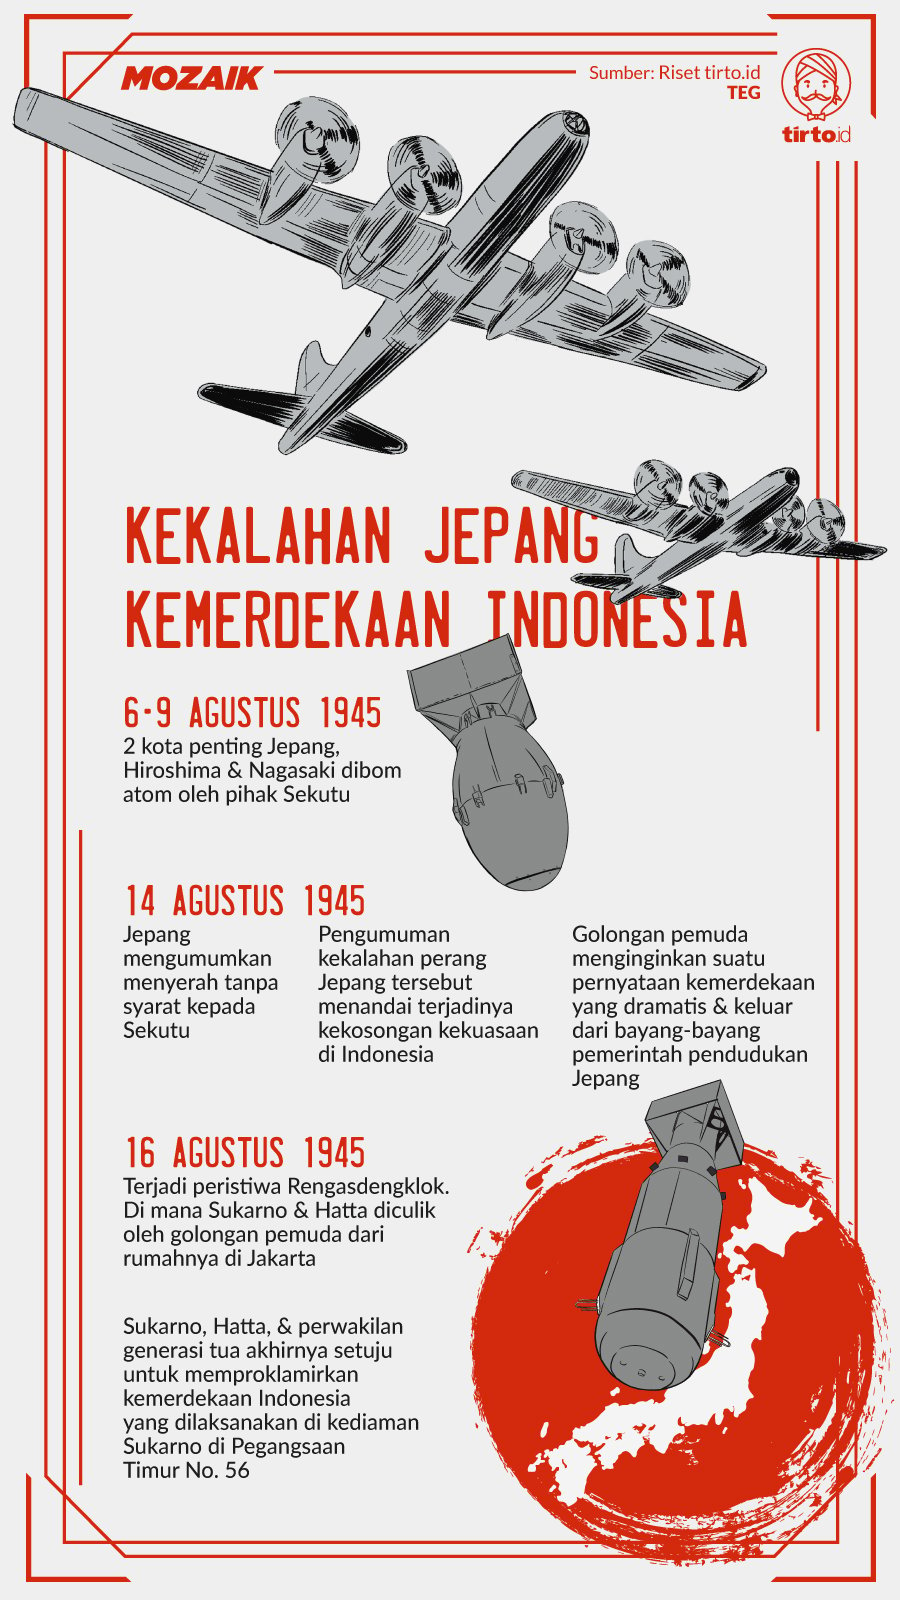 Apa tujuan datangnya kembali sekutu ke indonesia setelah kekalahan jepang dalam perang pasifik